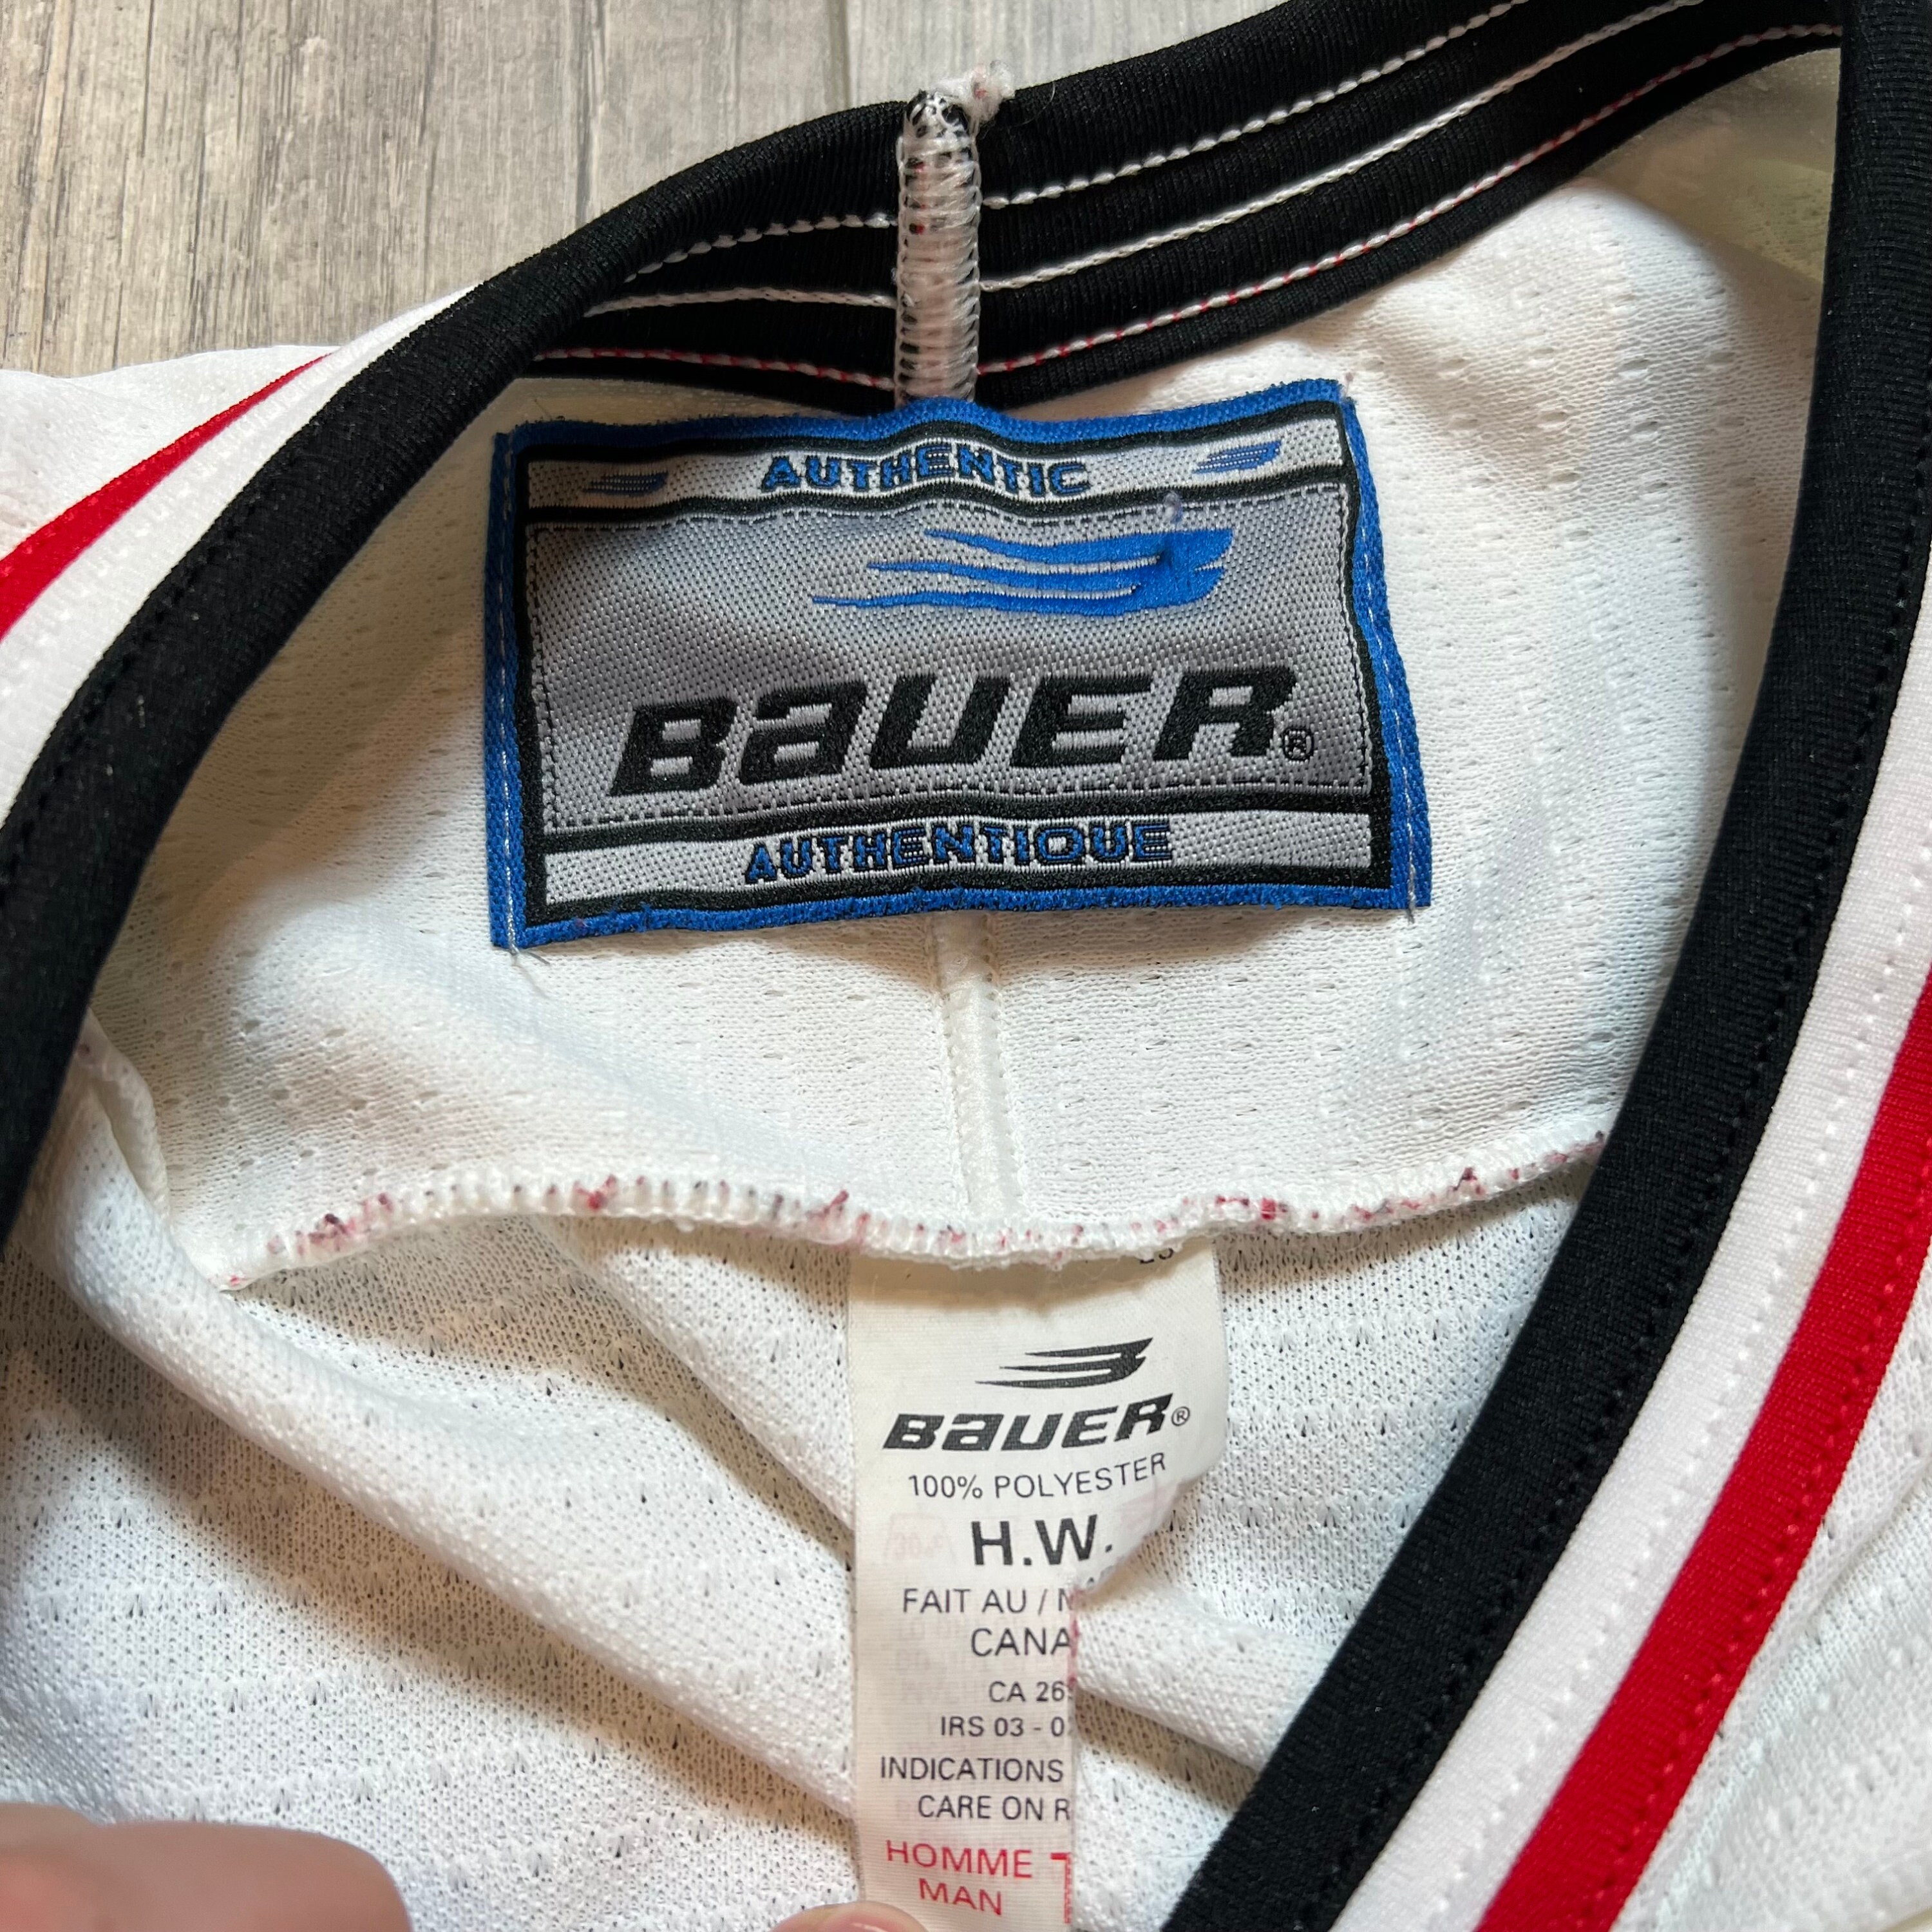 Bauer Team Canada 1996 World Cup White Hockey Jersey Mens M